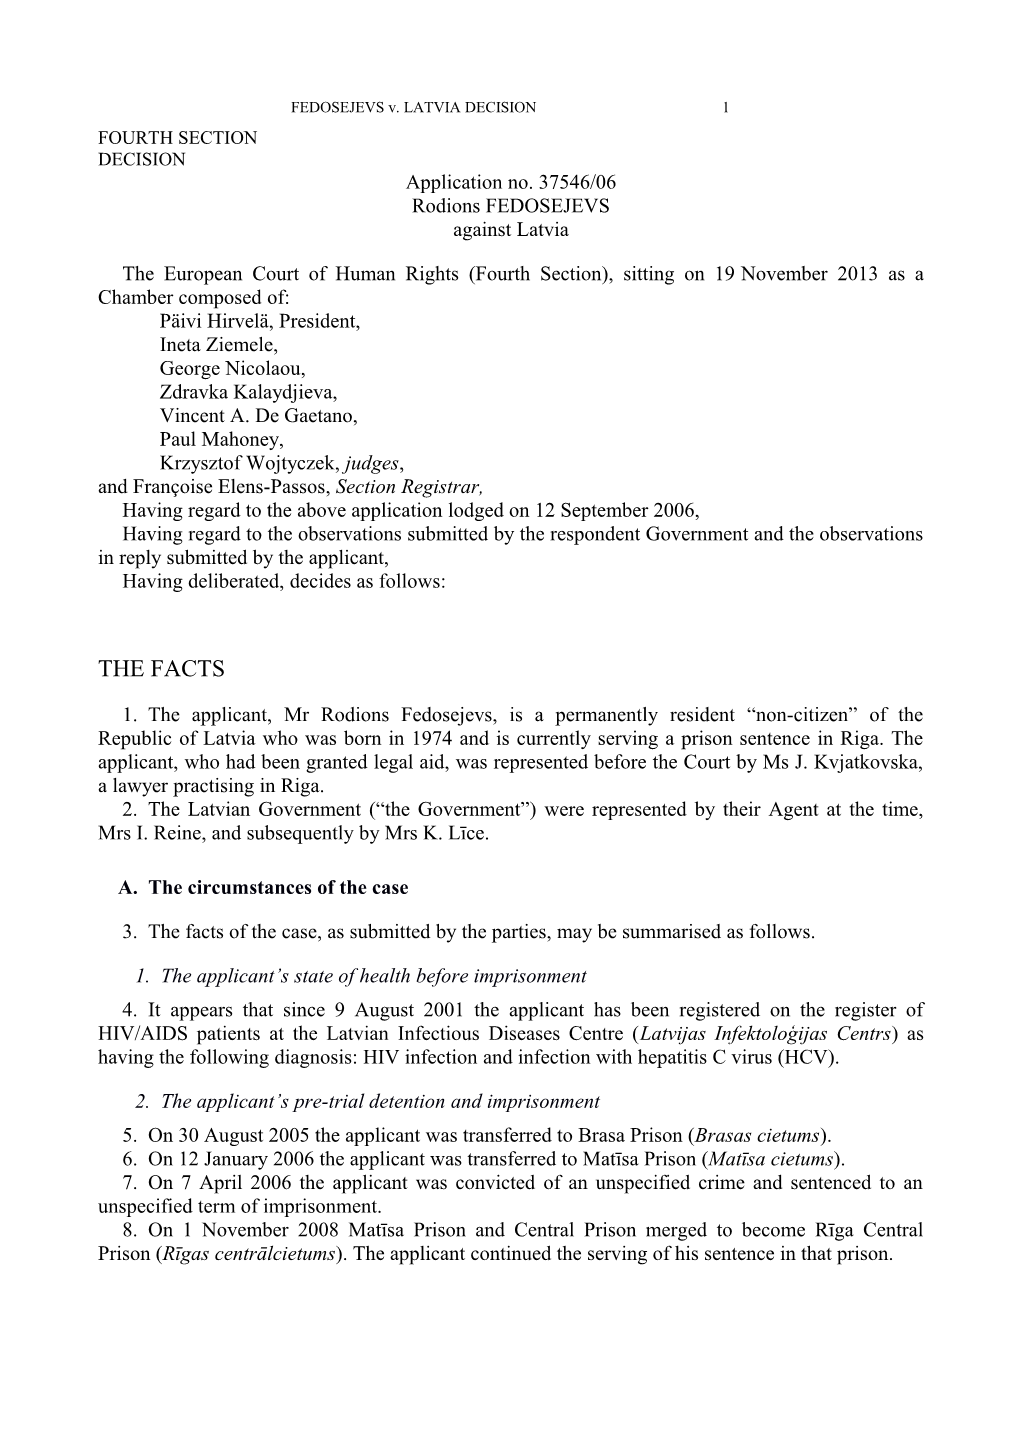 Application No.37546/06 Rodionsfedosejevs Against Latvia